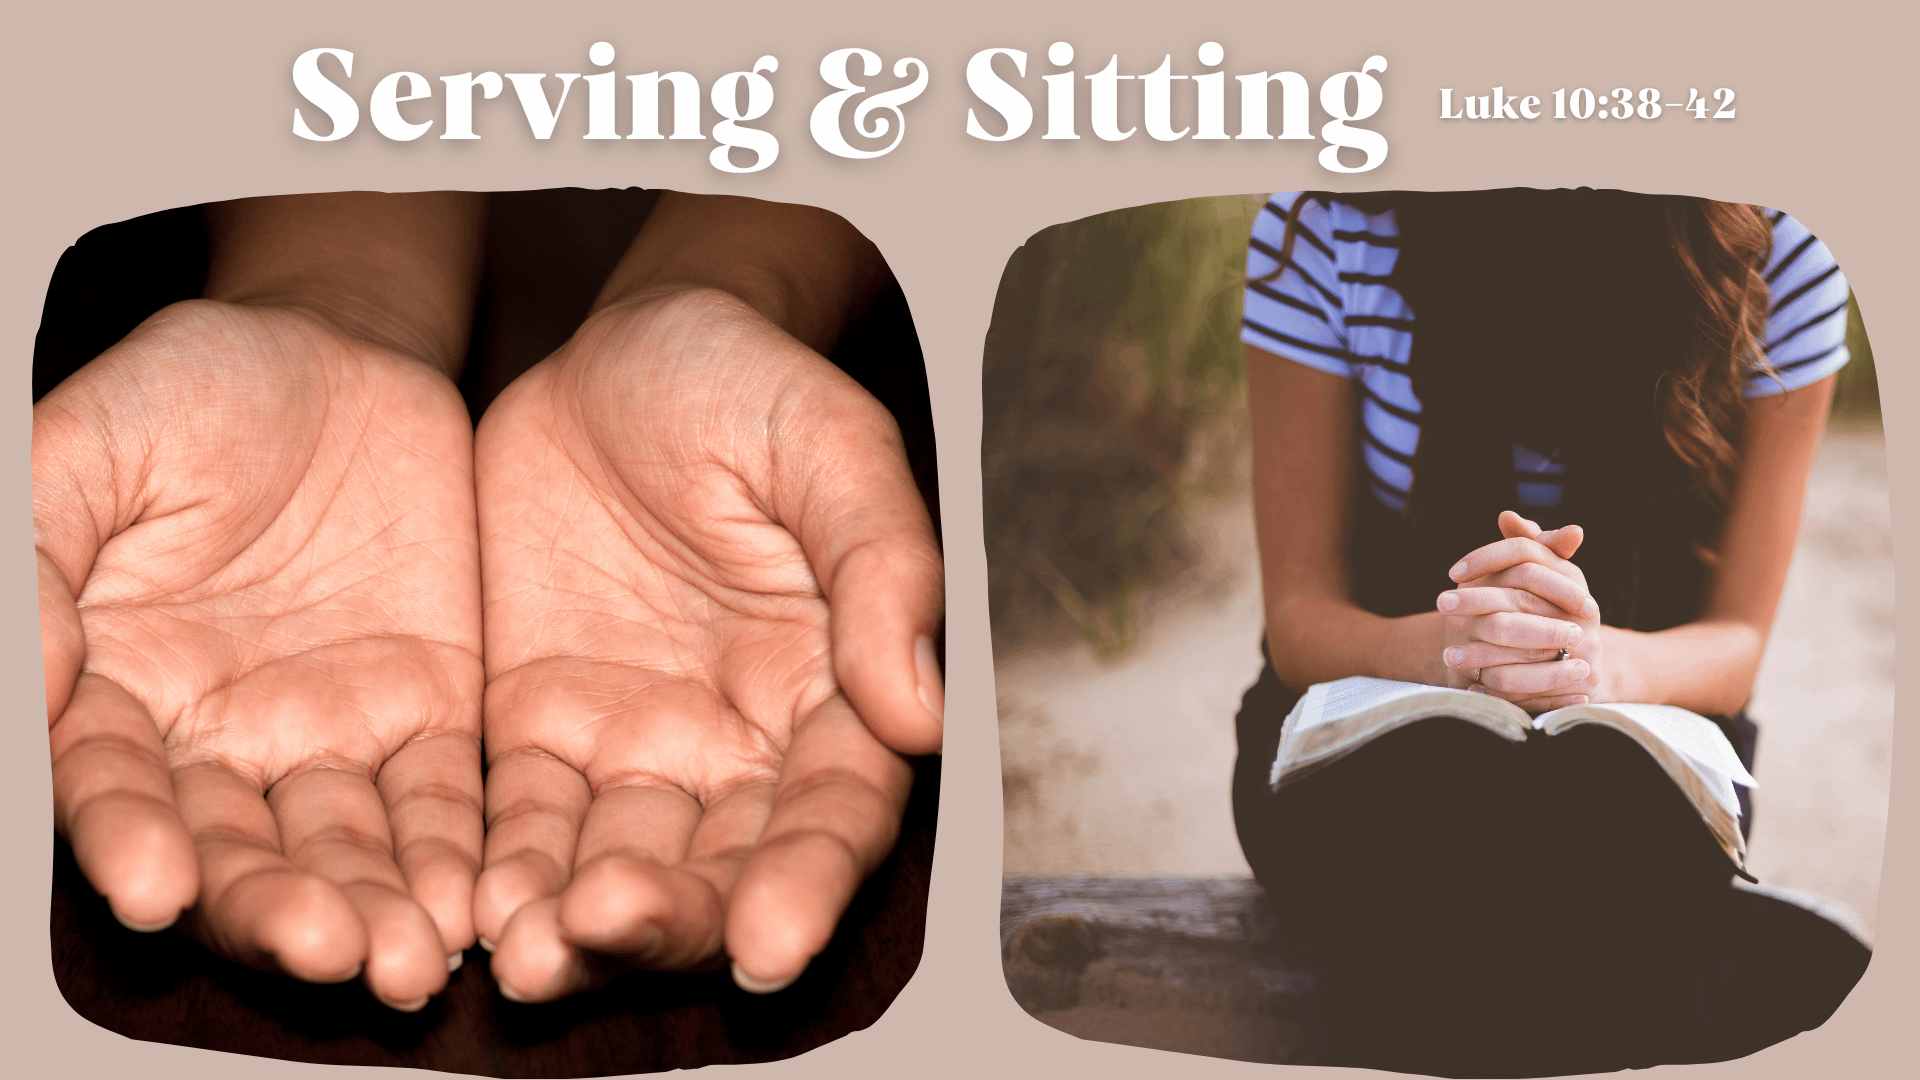 Serving & Sitting